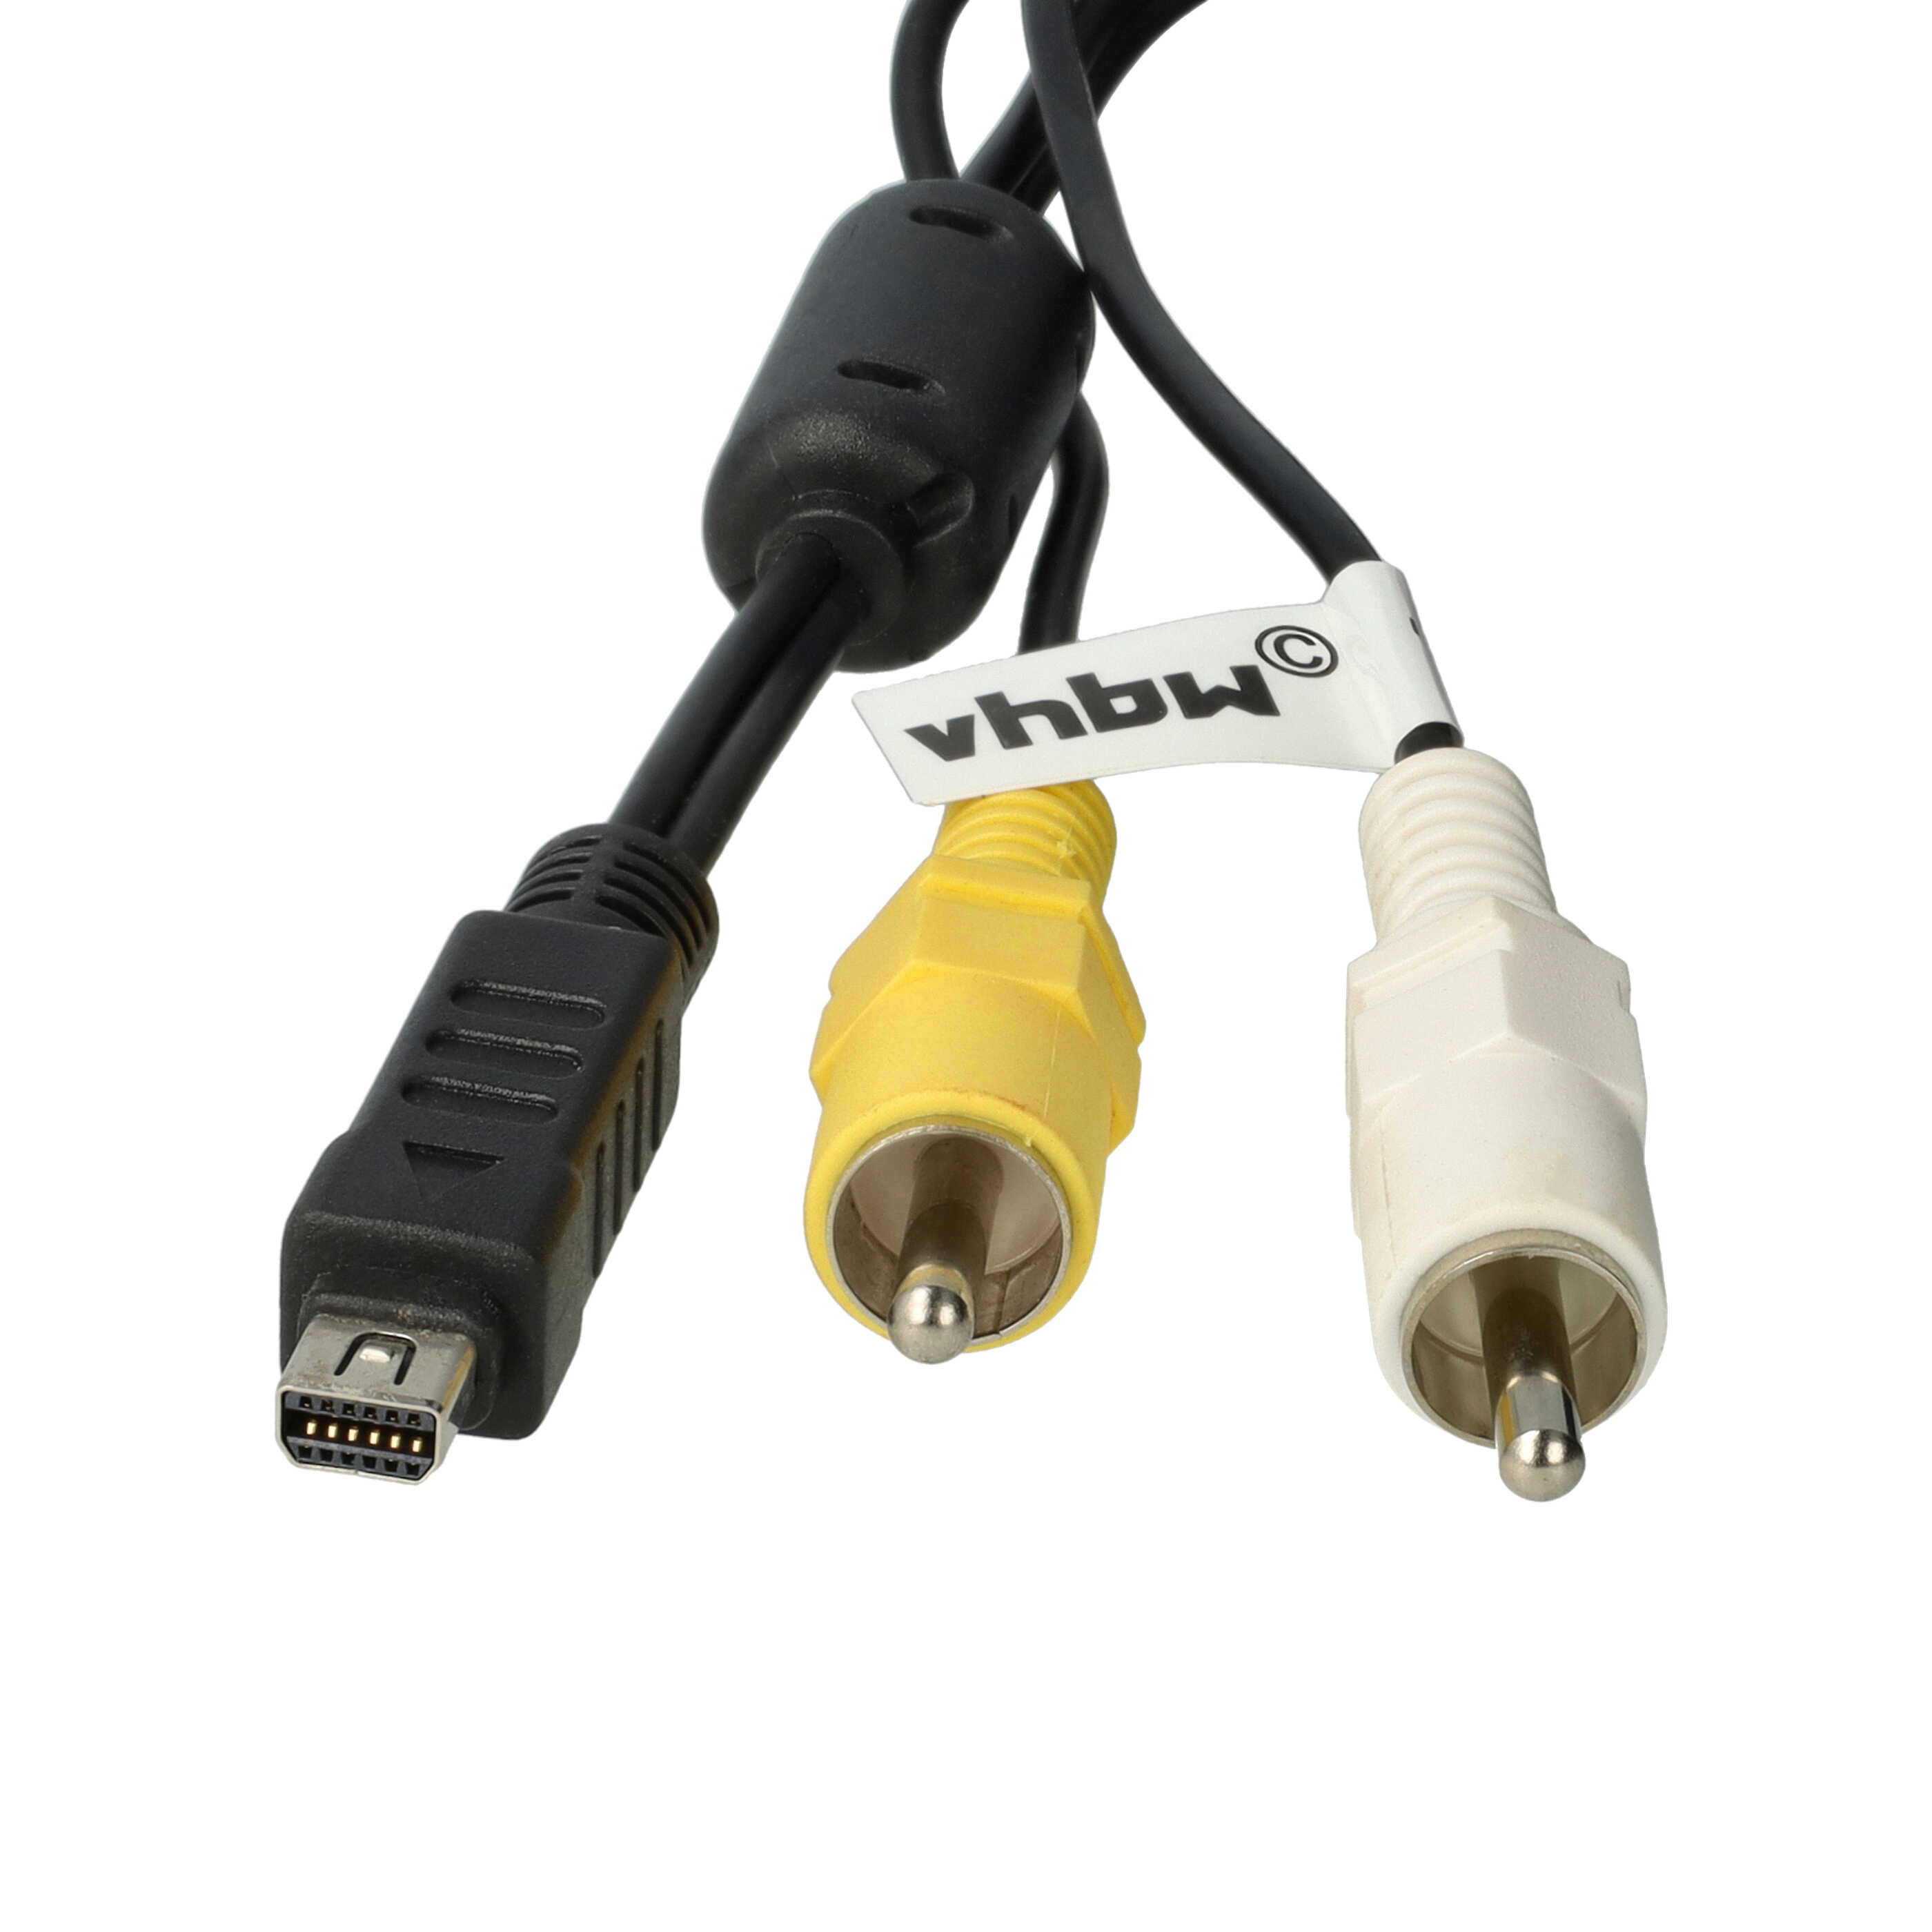 vhbw Audio Video Composite Kabel passend für Olympus C-170 Kamera, Digitalkamera - AV-Kabel